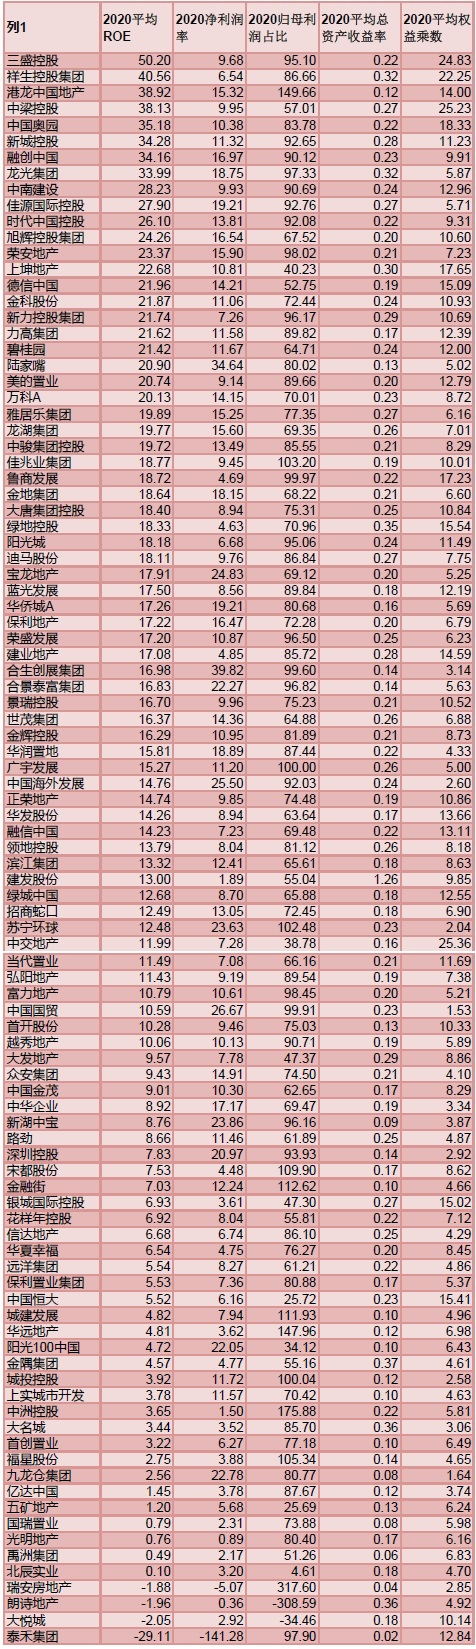 “【ROE看房企】禹州集团业绩骤降 ROE、利润率、周转率均滑坡